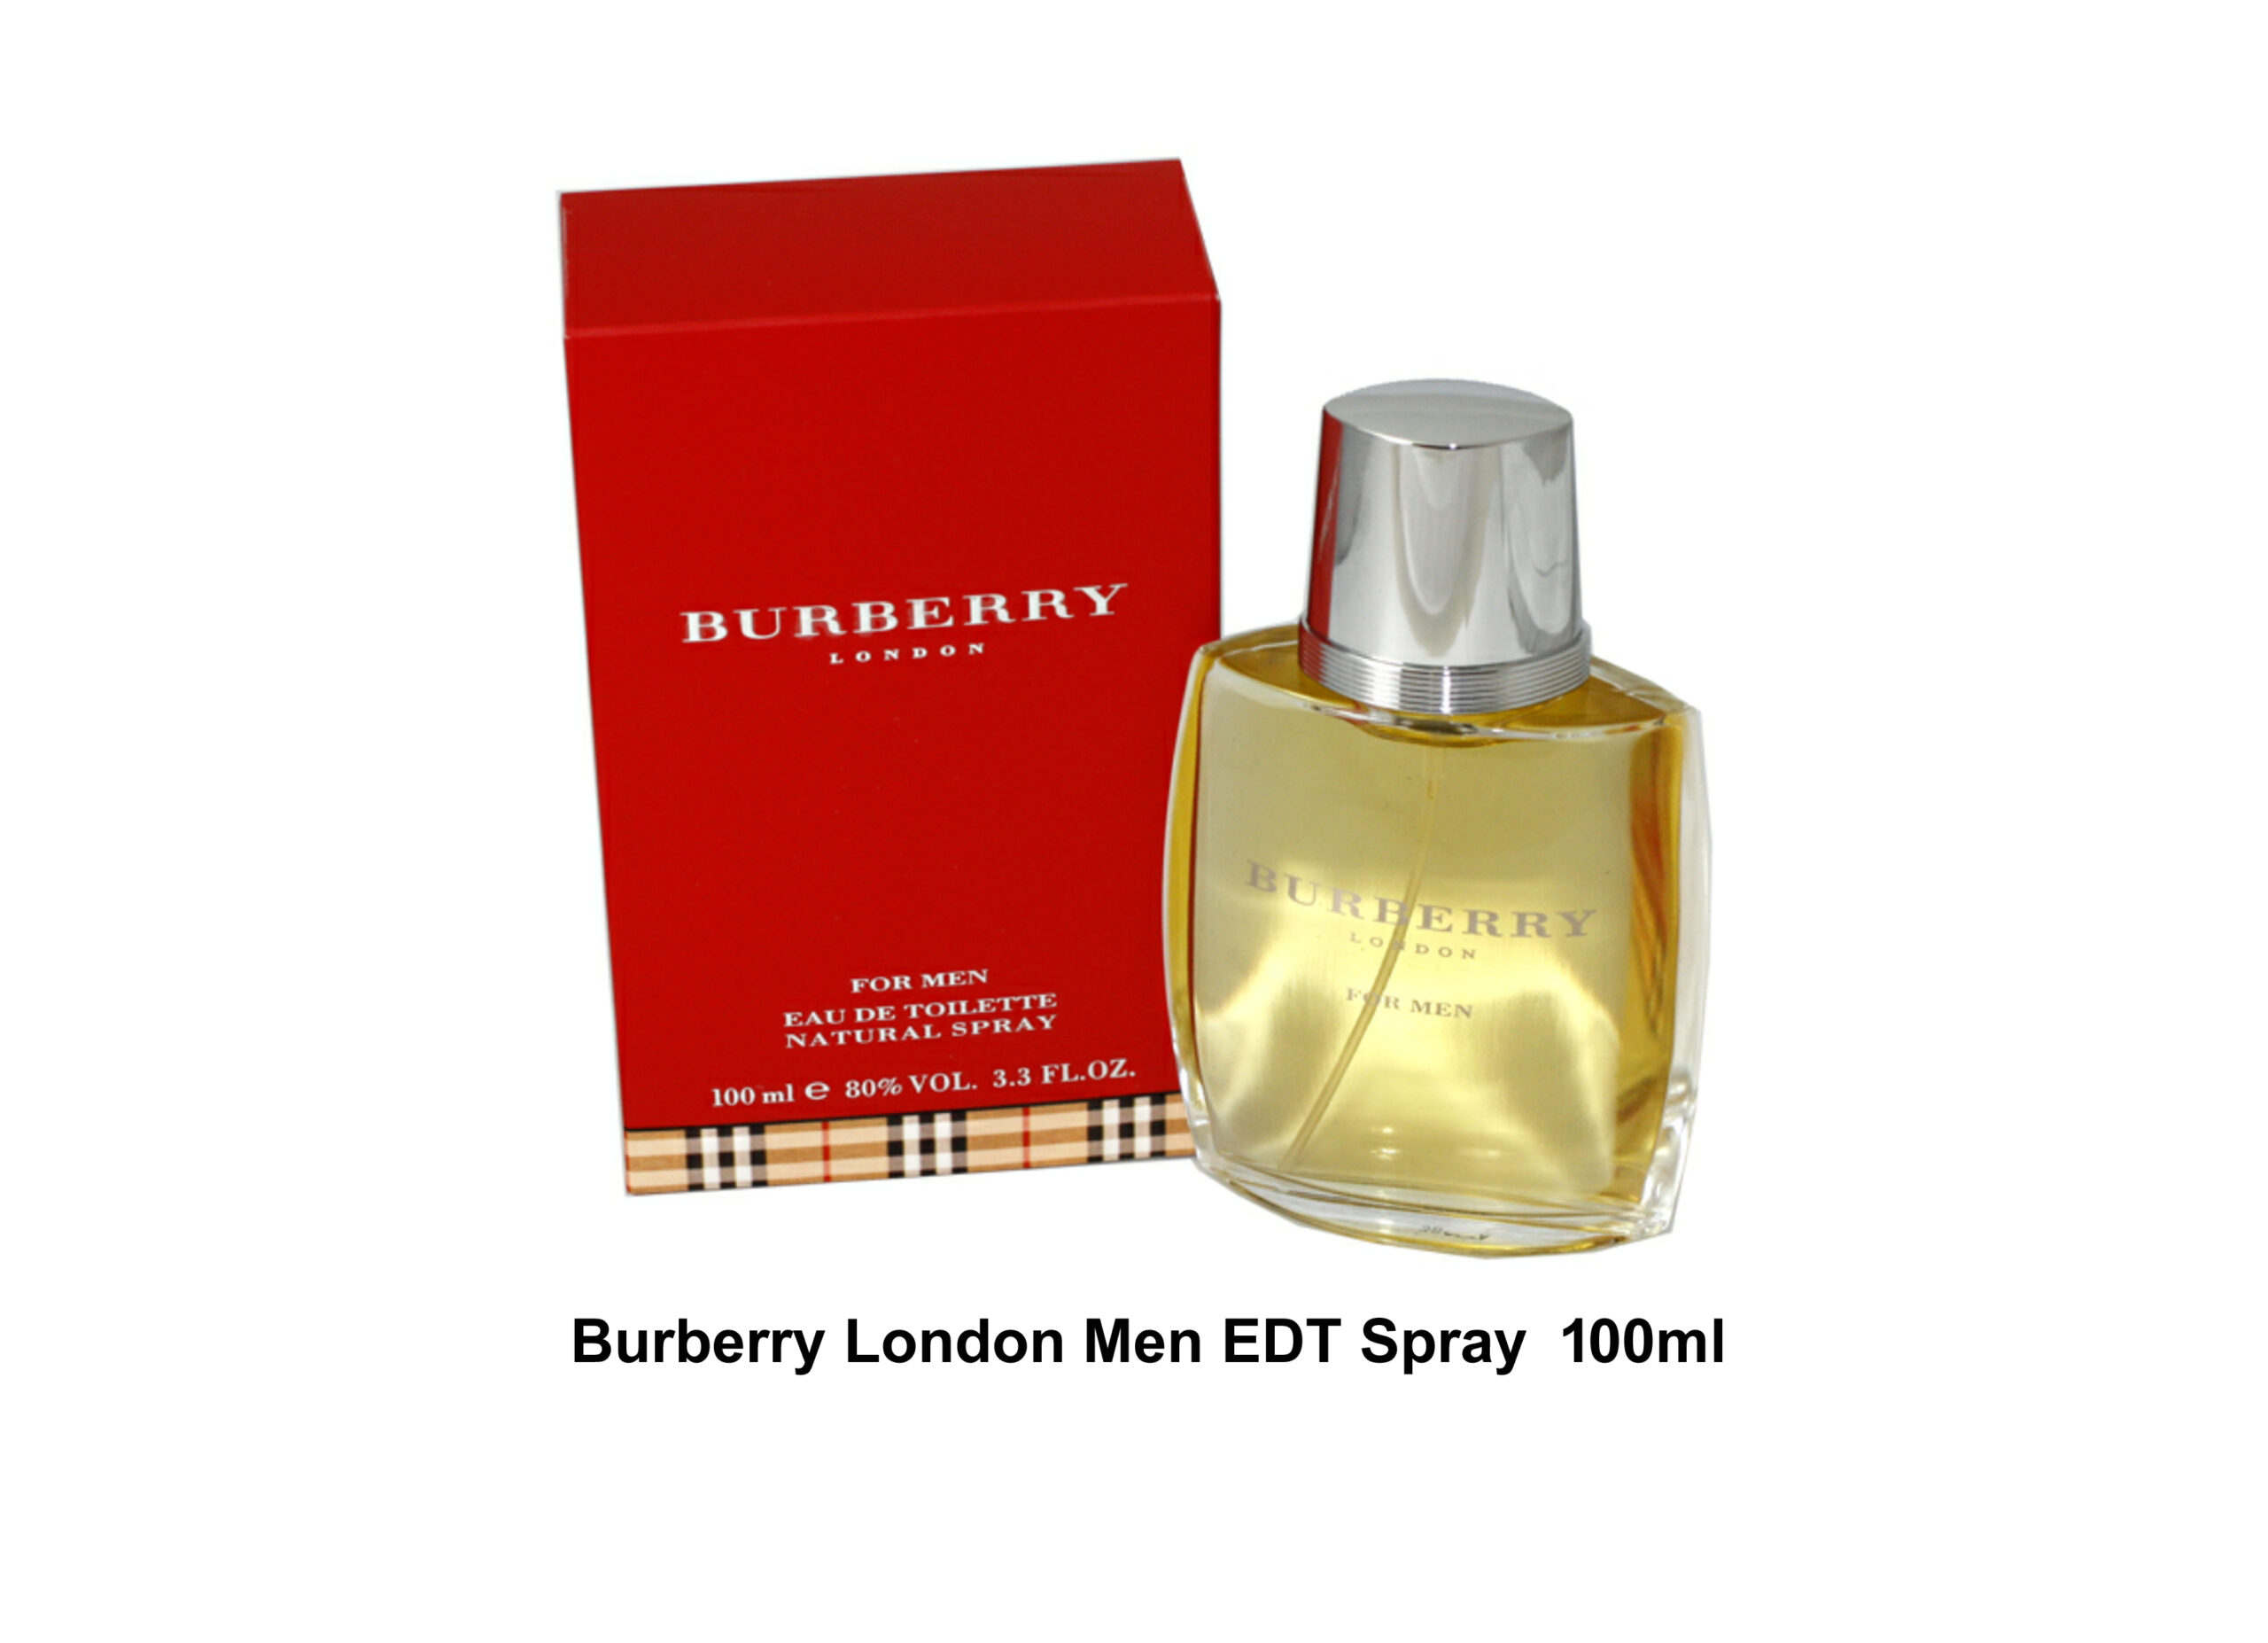 Burberry London Men EDT Spray 100ml